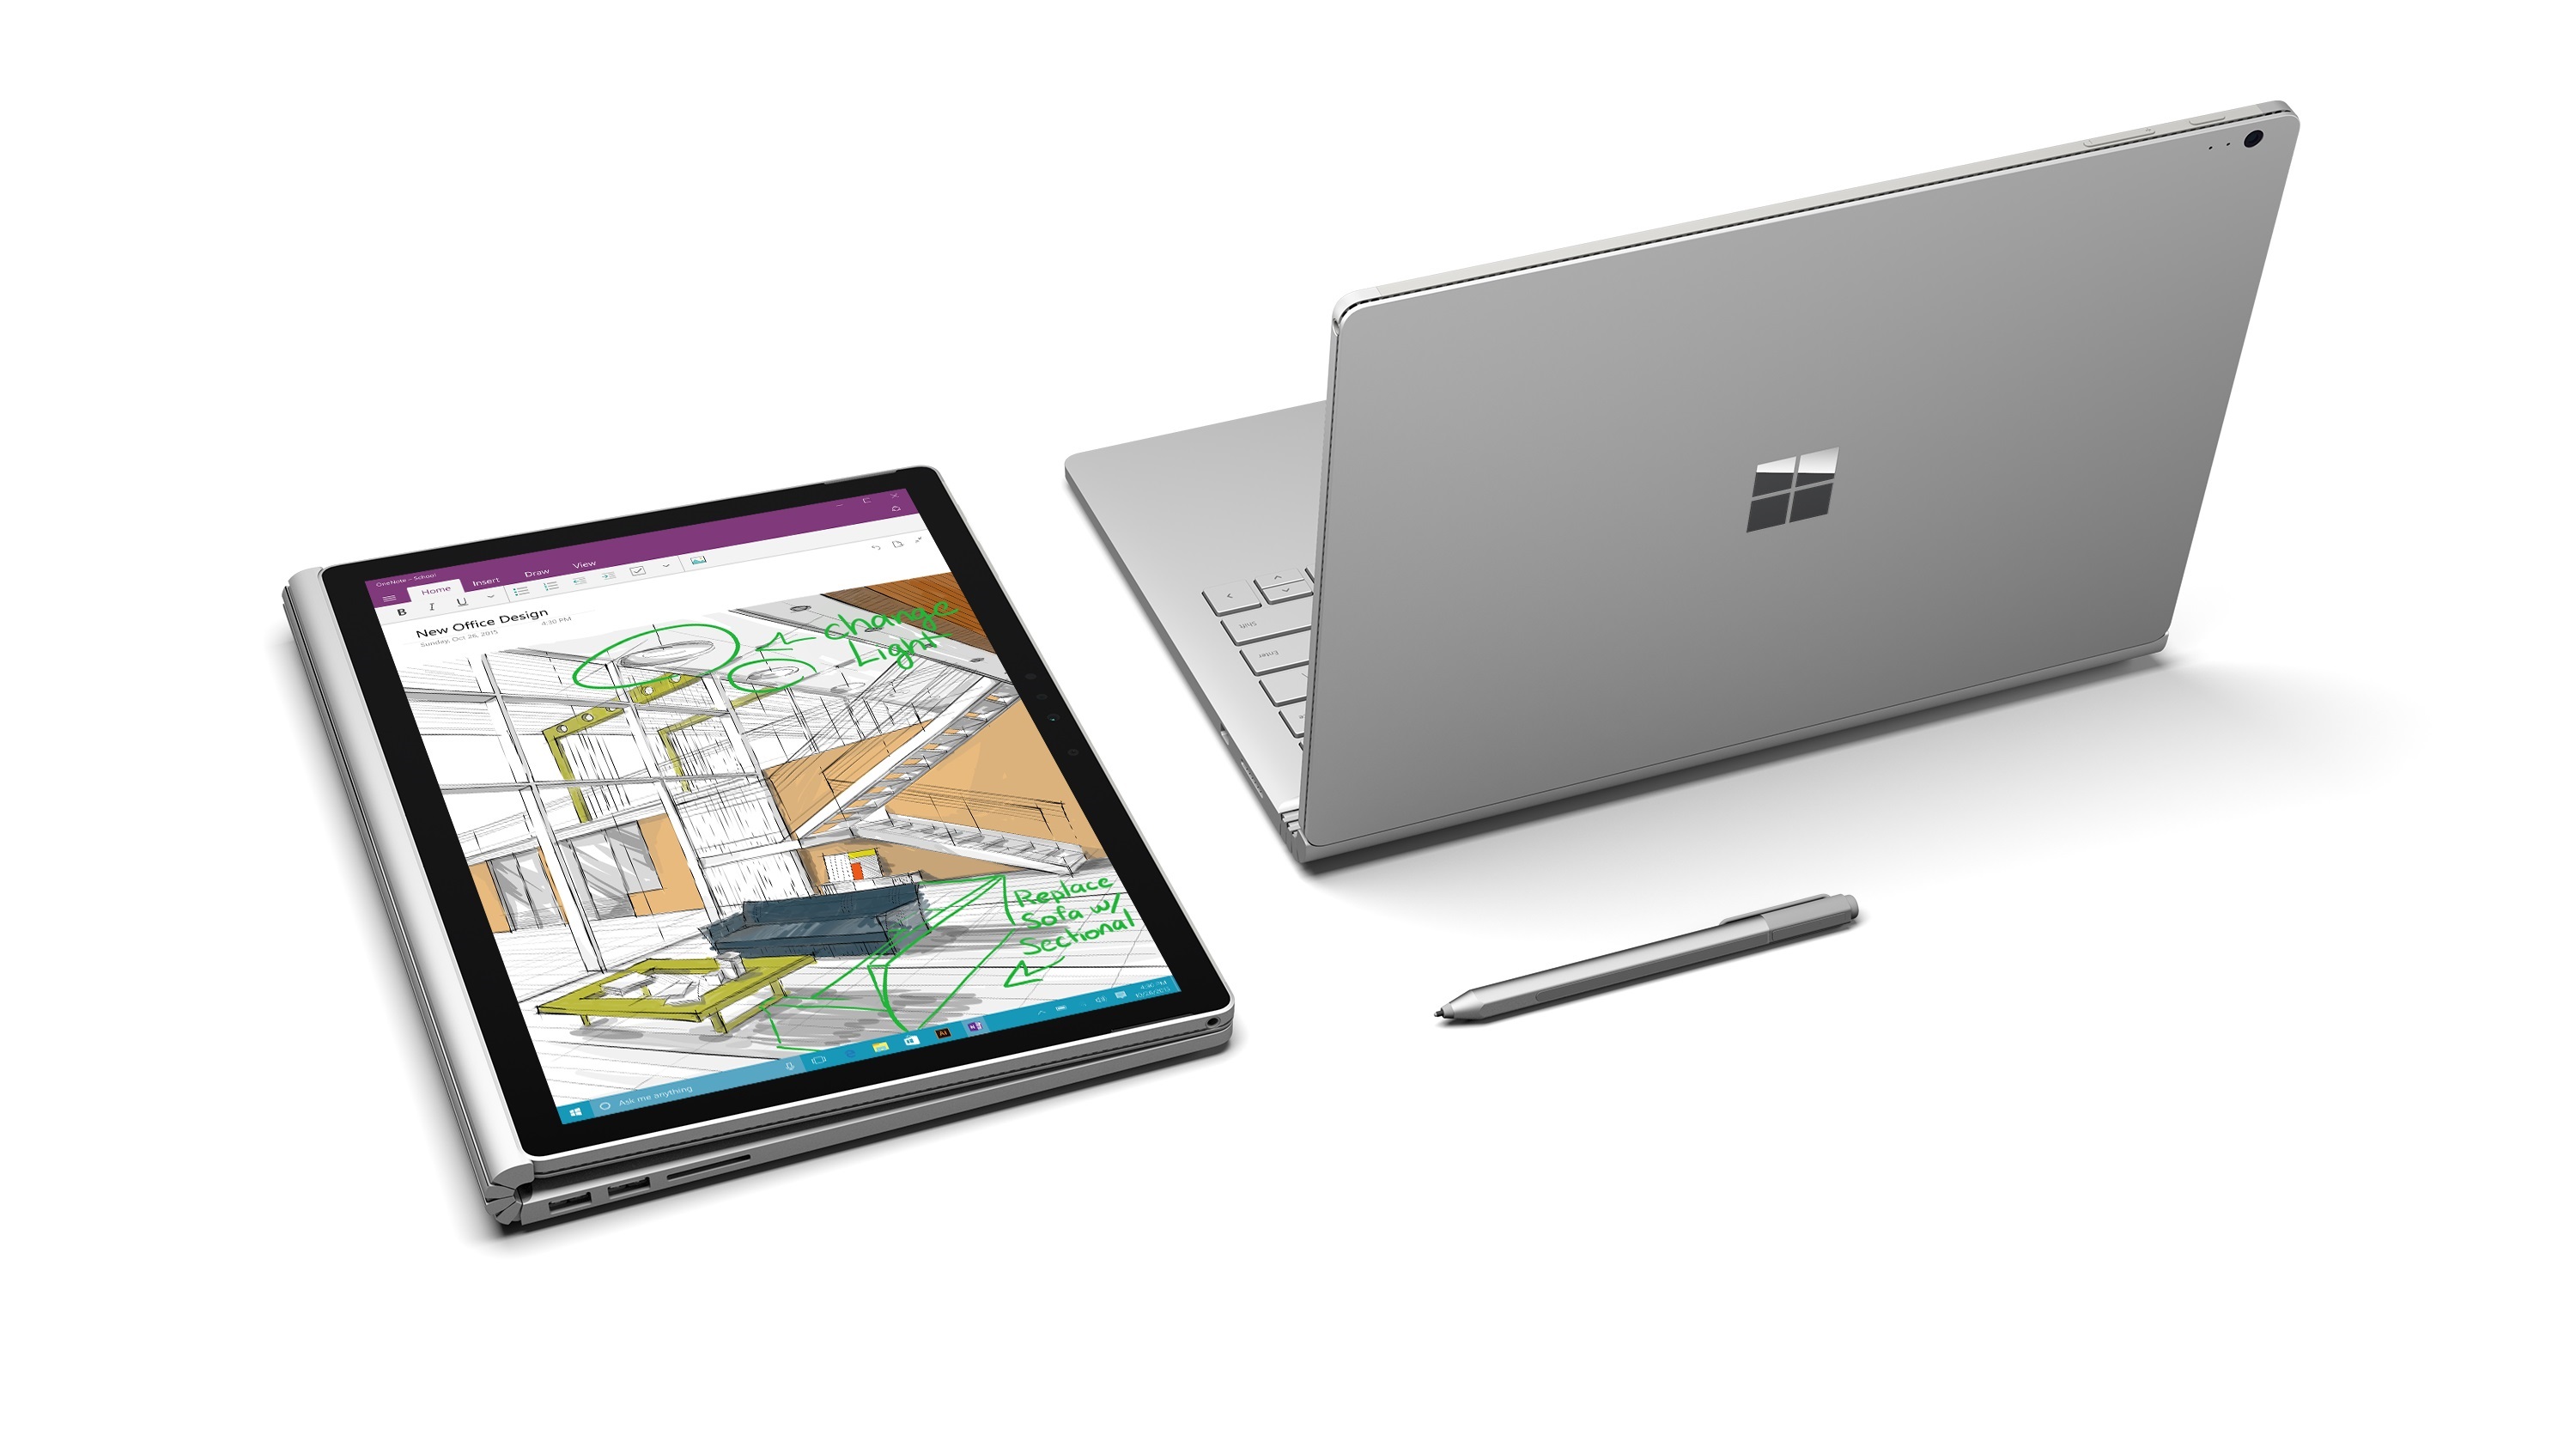 Surface Book 3 (13,5 Inches) 256GB/ Intel Core i7-1065G7/ 16GB RAM/ NVIDIA GeForce GTX 1650 Max-Q 4GB GDDR5